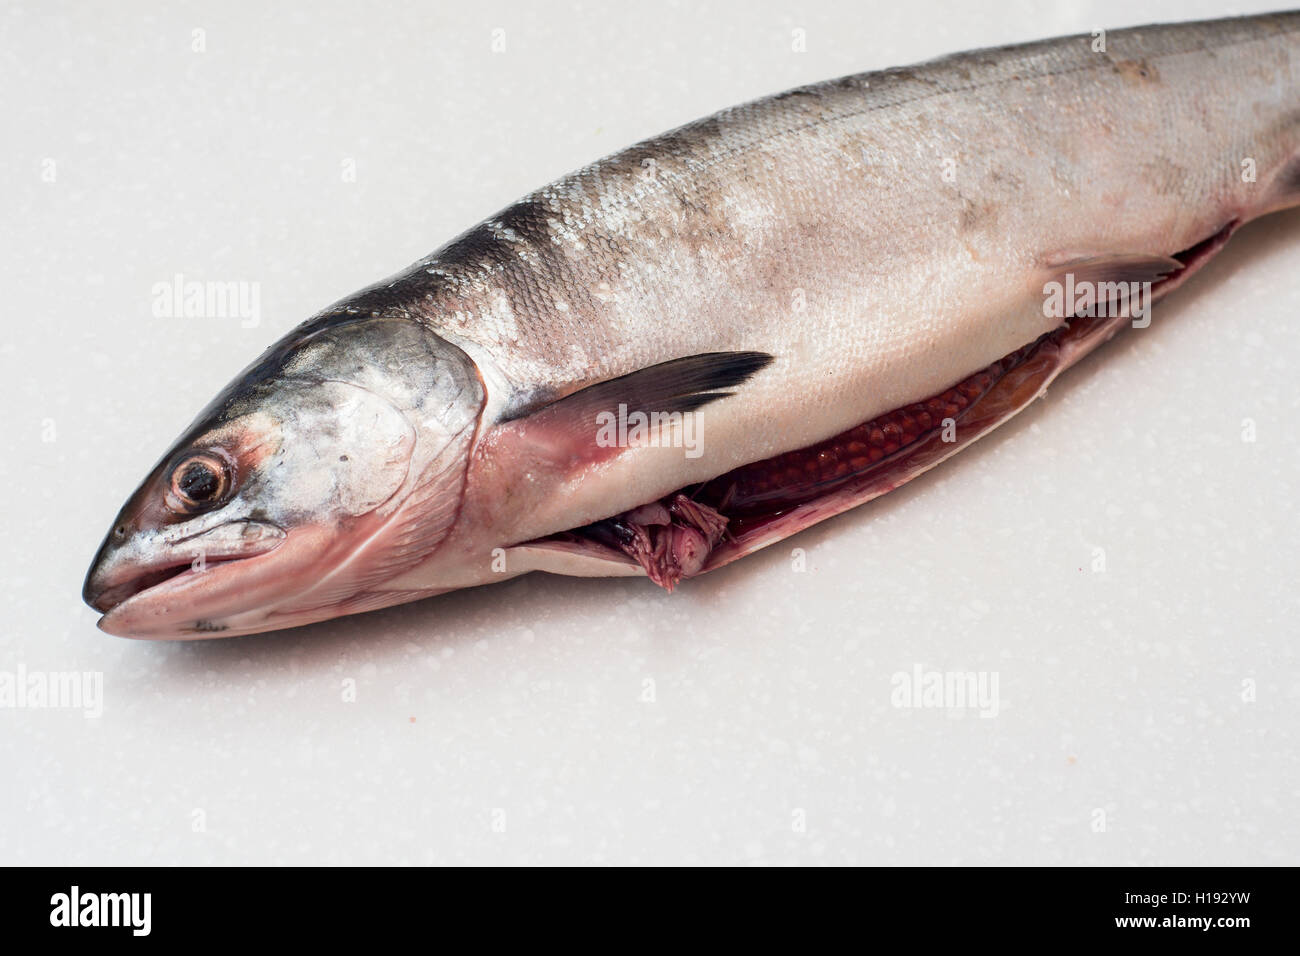 https://c8.alamy.com/comp/H192YW/salmon-fishs-on-white-background-H192YW.jpg